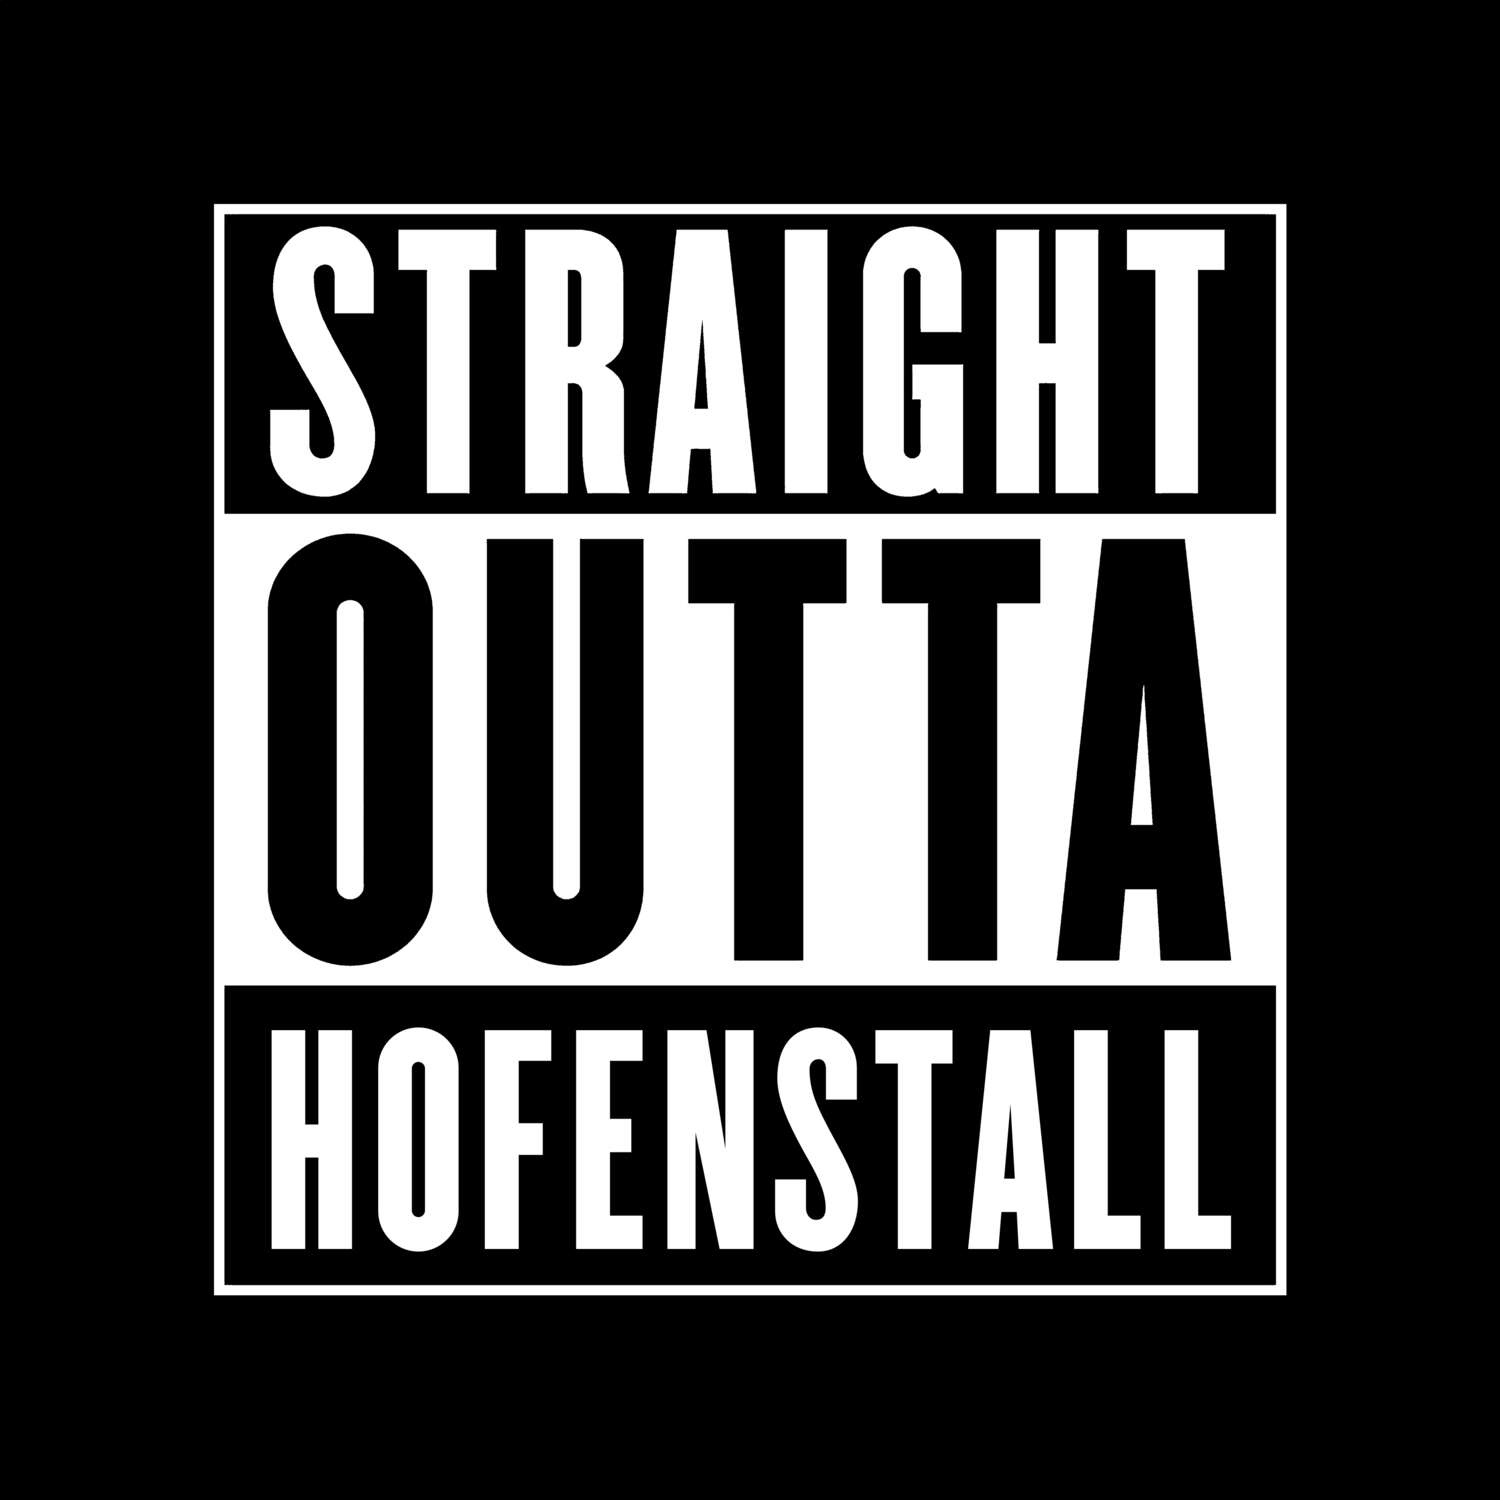 Hofenstall T-Shirt »Straight Outta«